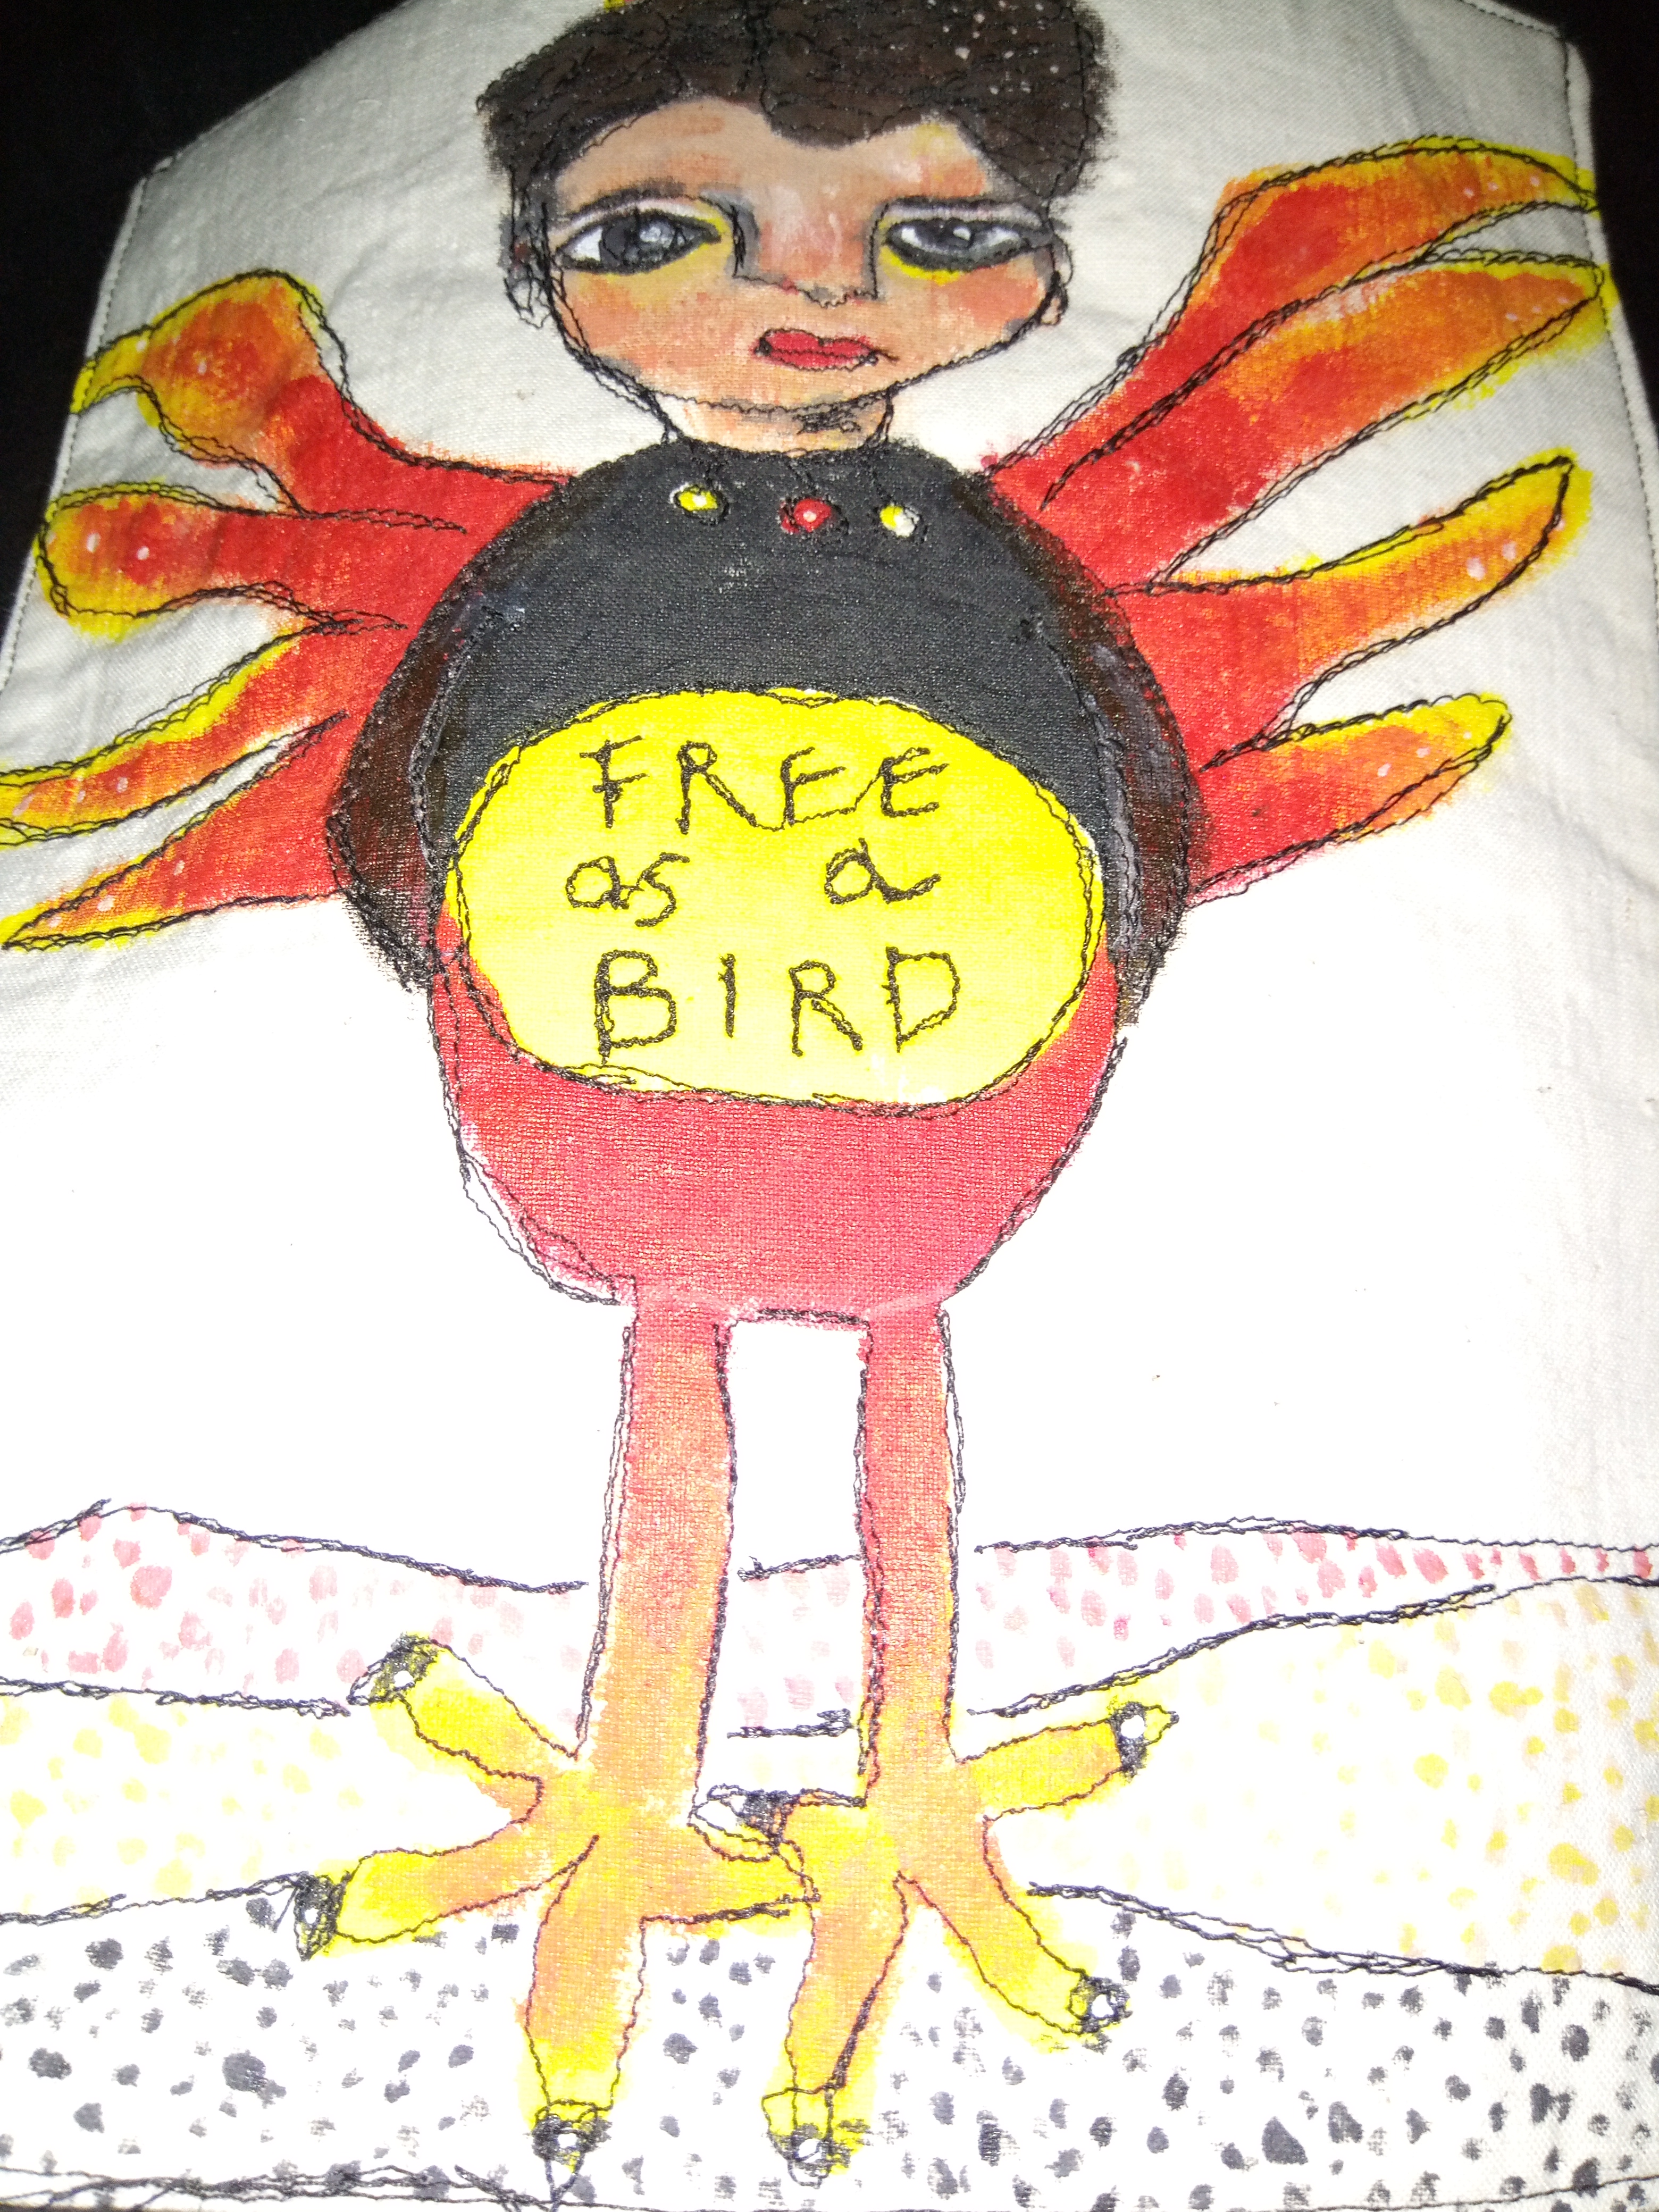 Jane_Free as a bird now